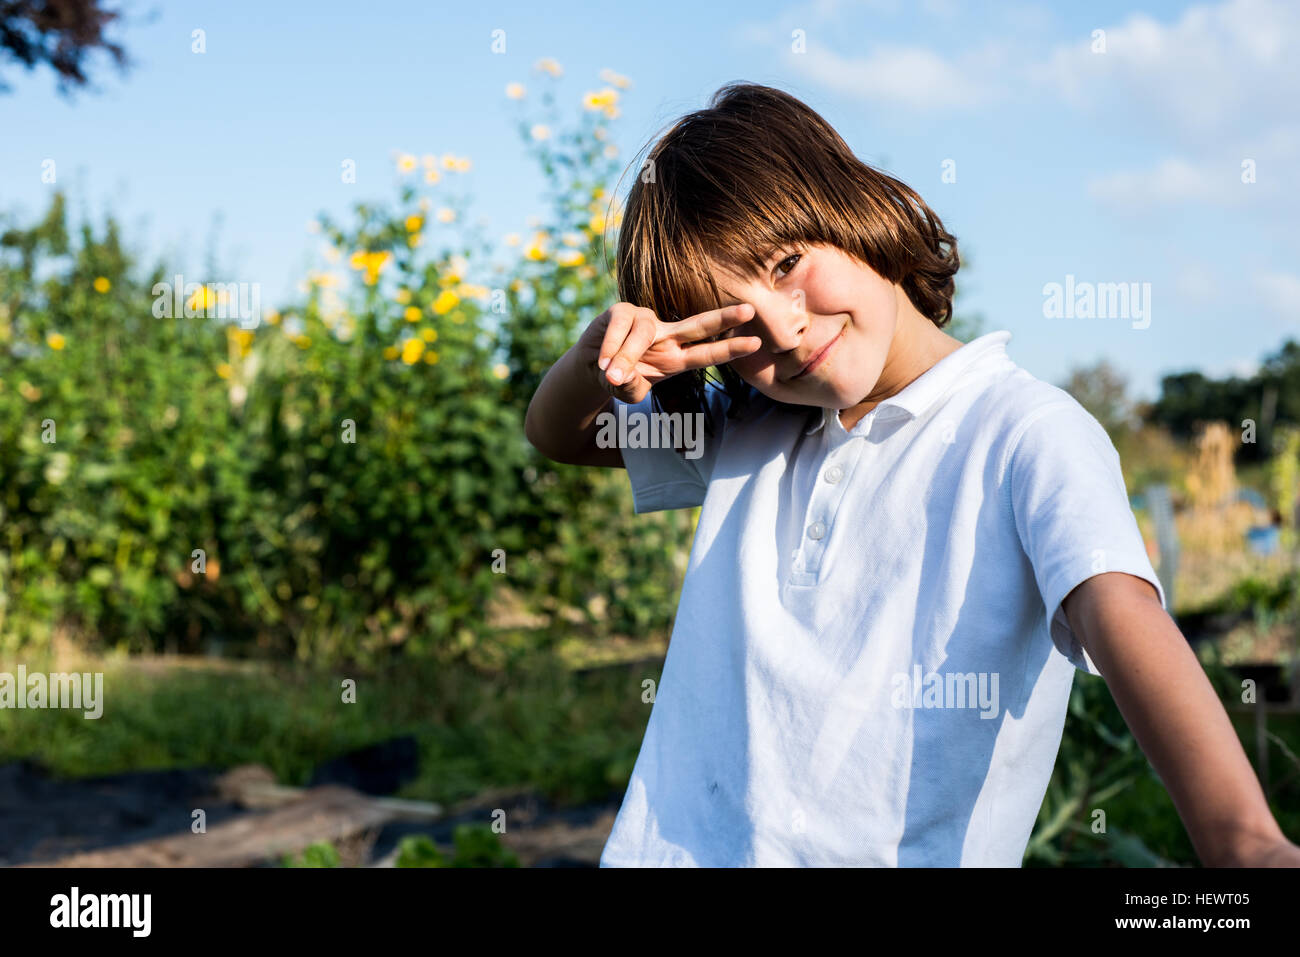 Portrait of happy boy making peace sign hand gesture in rural garden Stock Photo